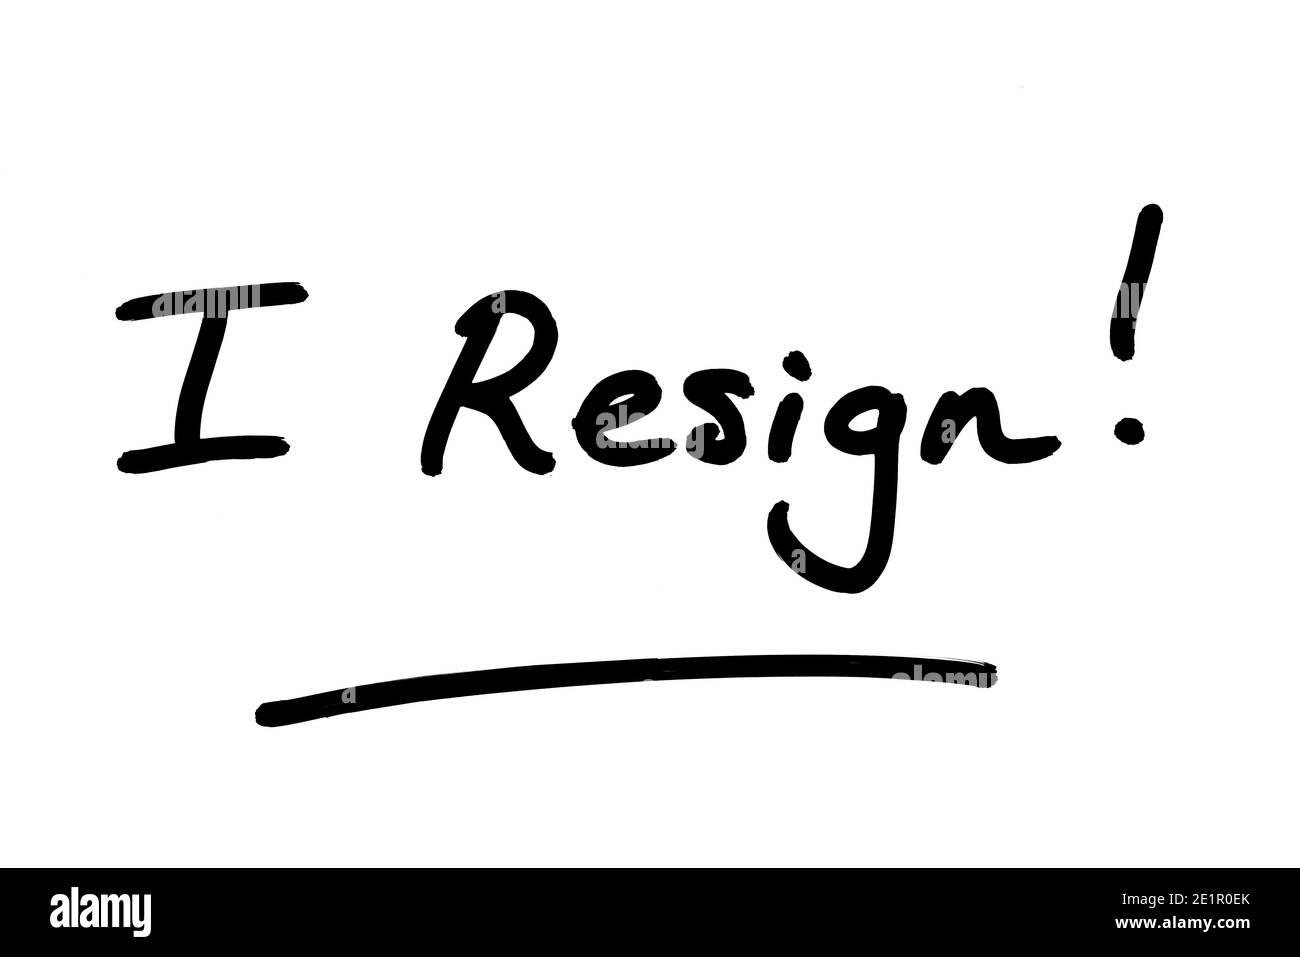 I Resign! handwritten on a white background. Stock Photo